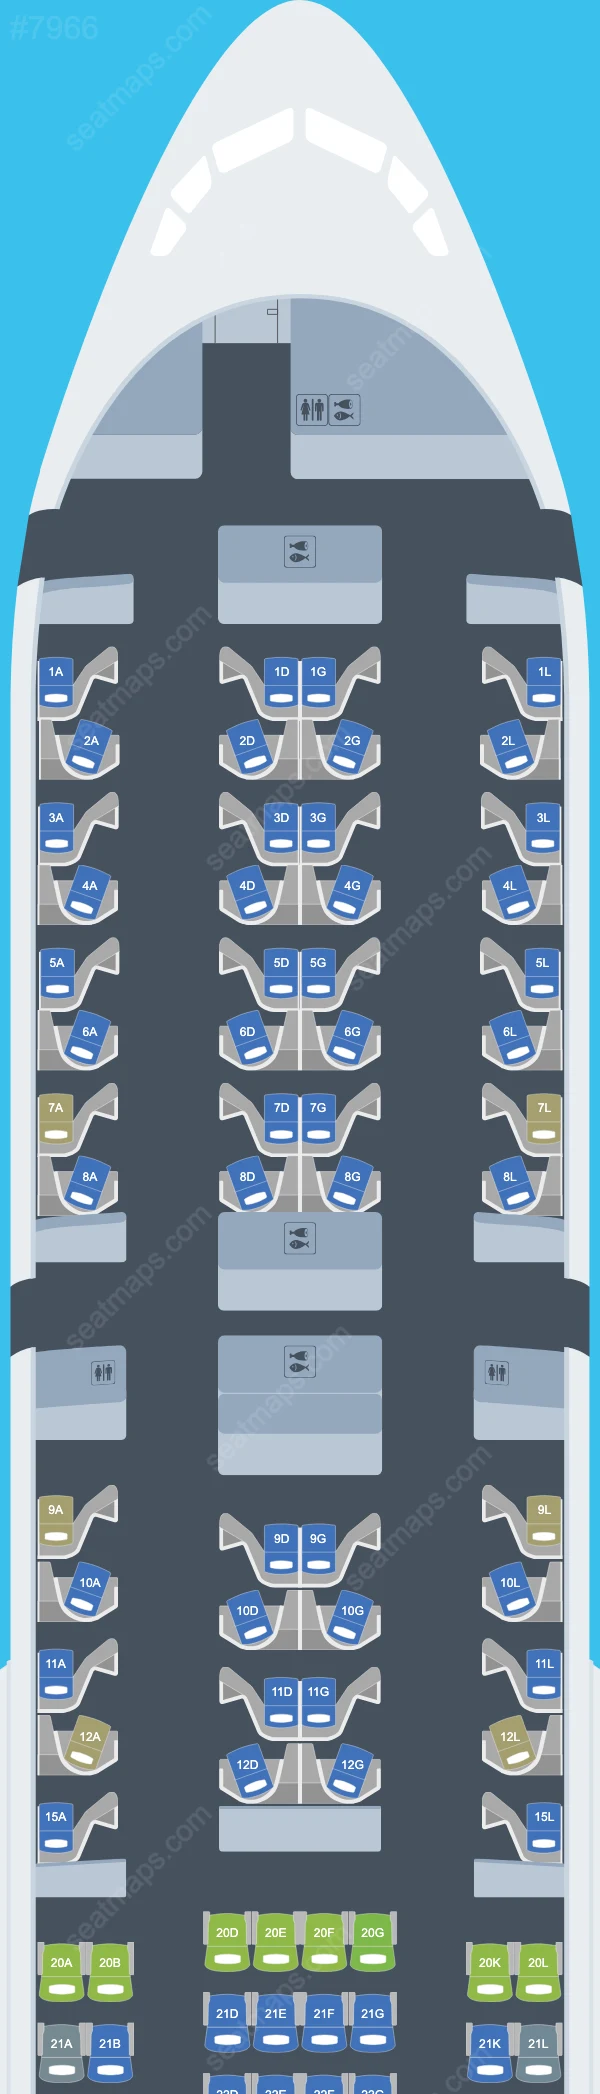 United Boeing 777 Seat Maps 777-200 ER V.1